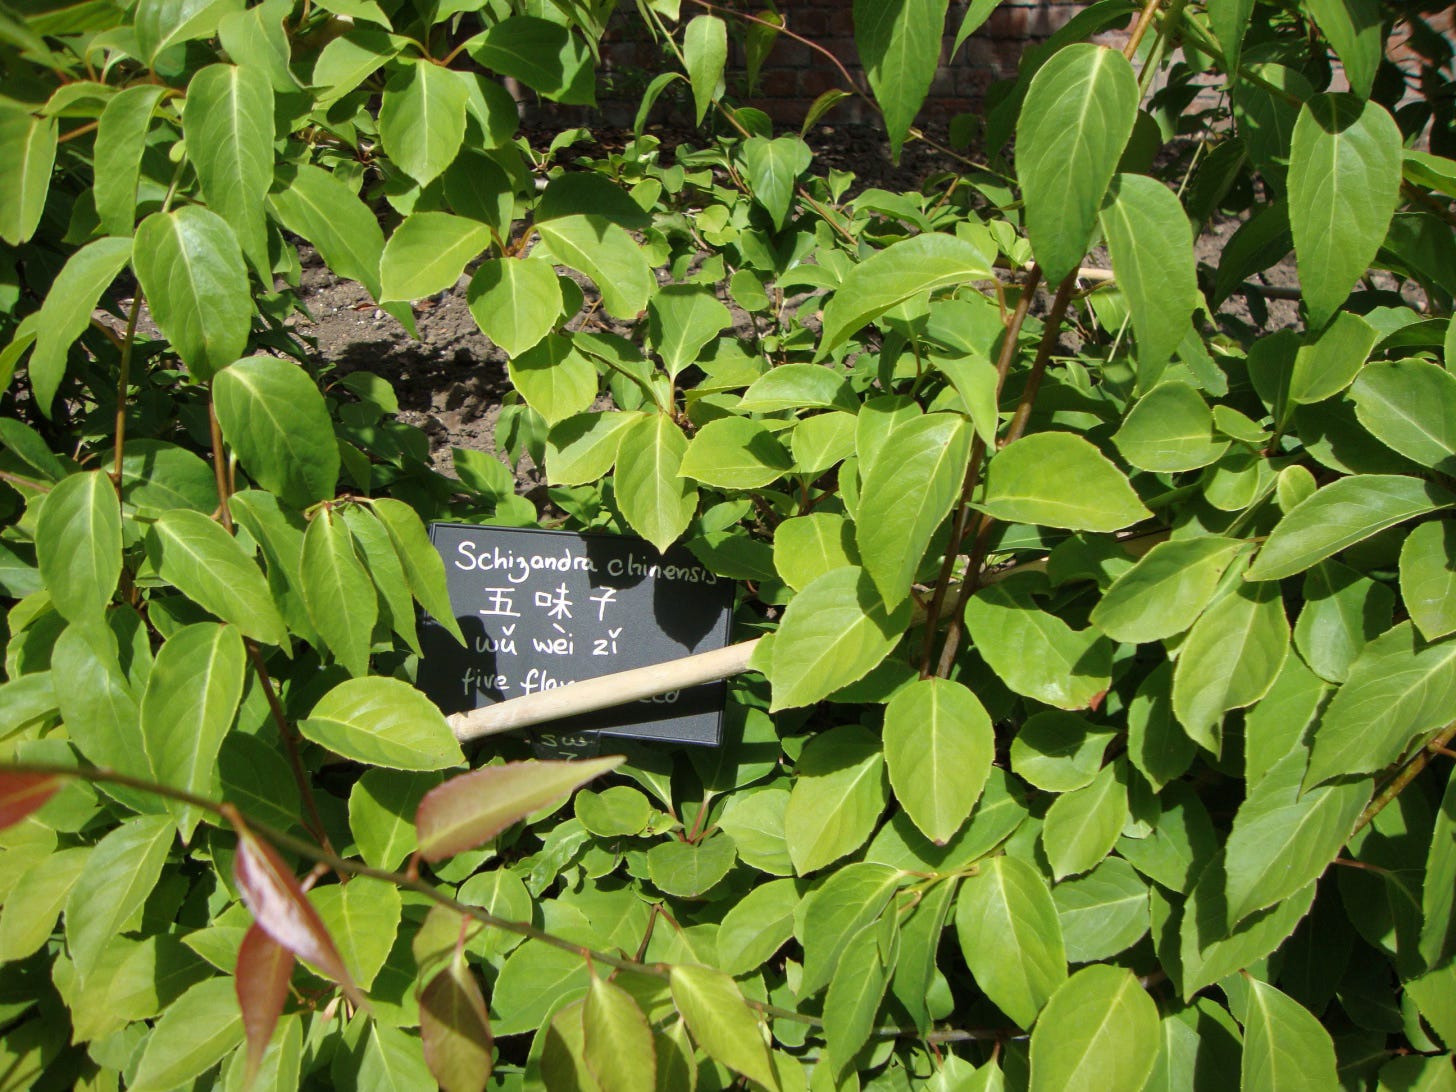 Leafy magnolia vine with plant label